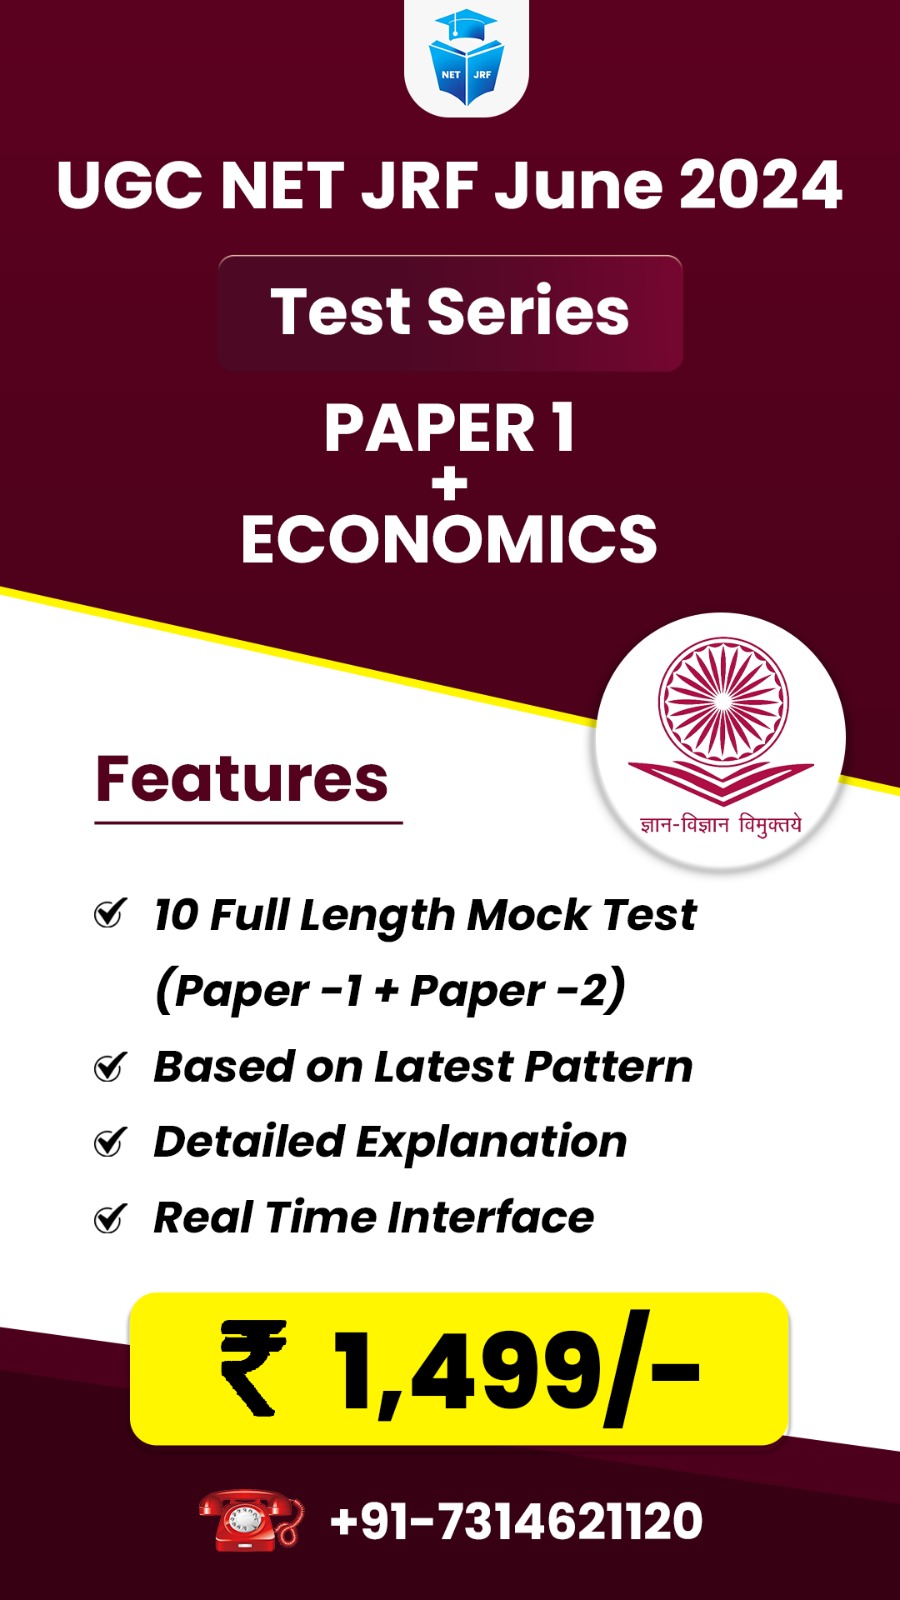 Economics (Paper 1 + Paper 2) Test Series for June 2024